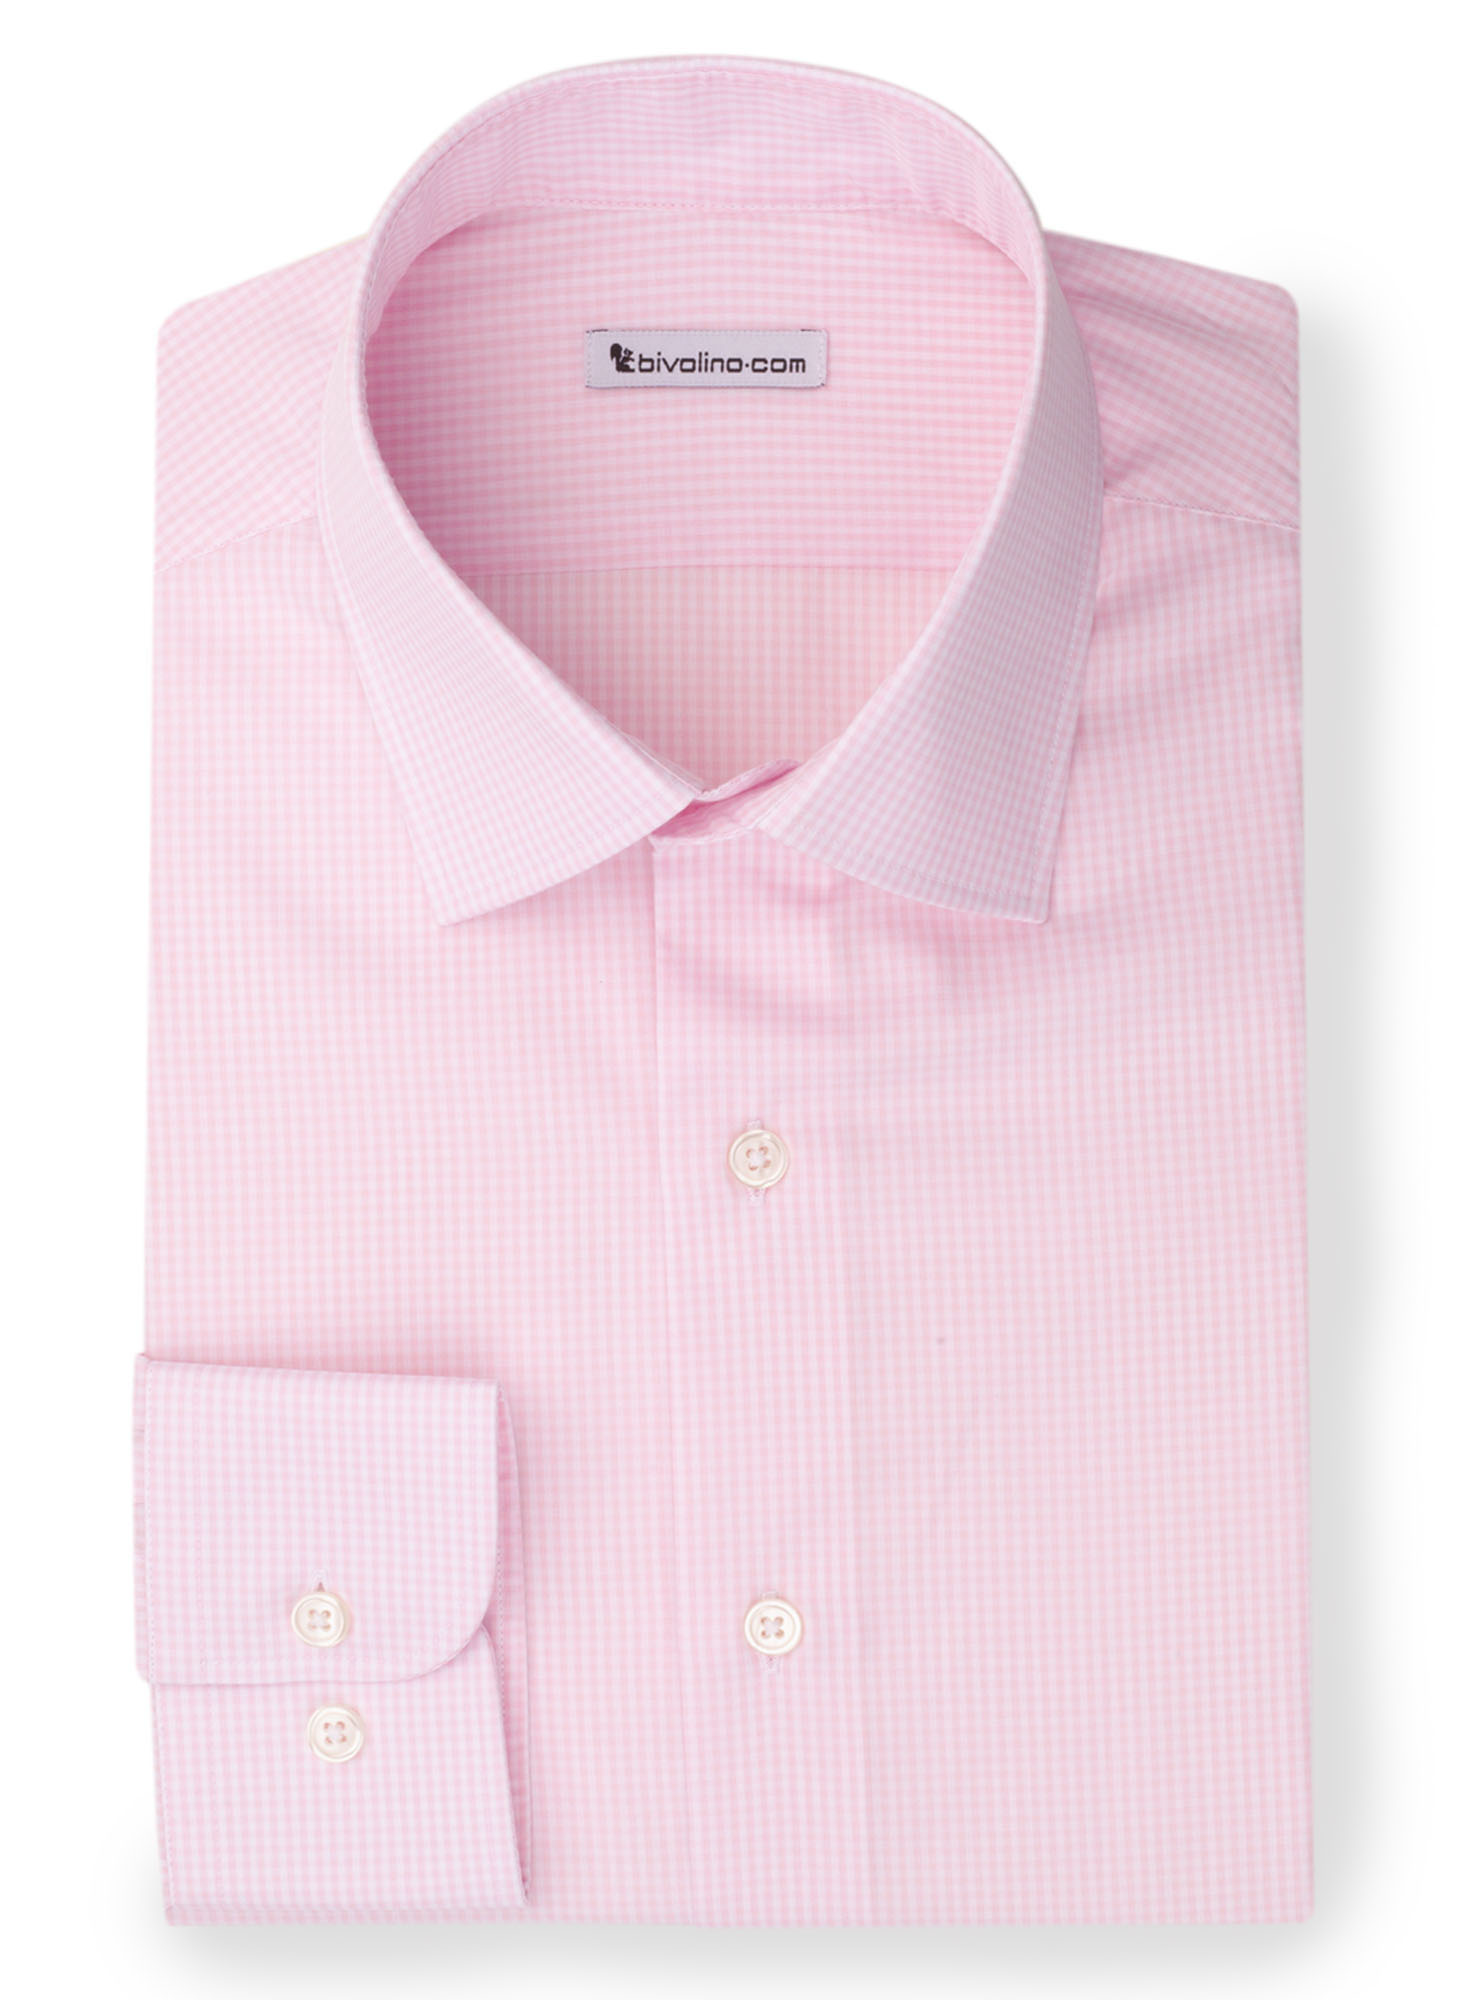 BOLIVICINI - pink poplin gingham shirt - Kento 1